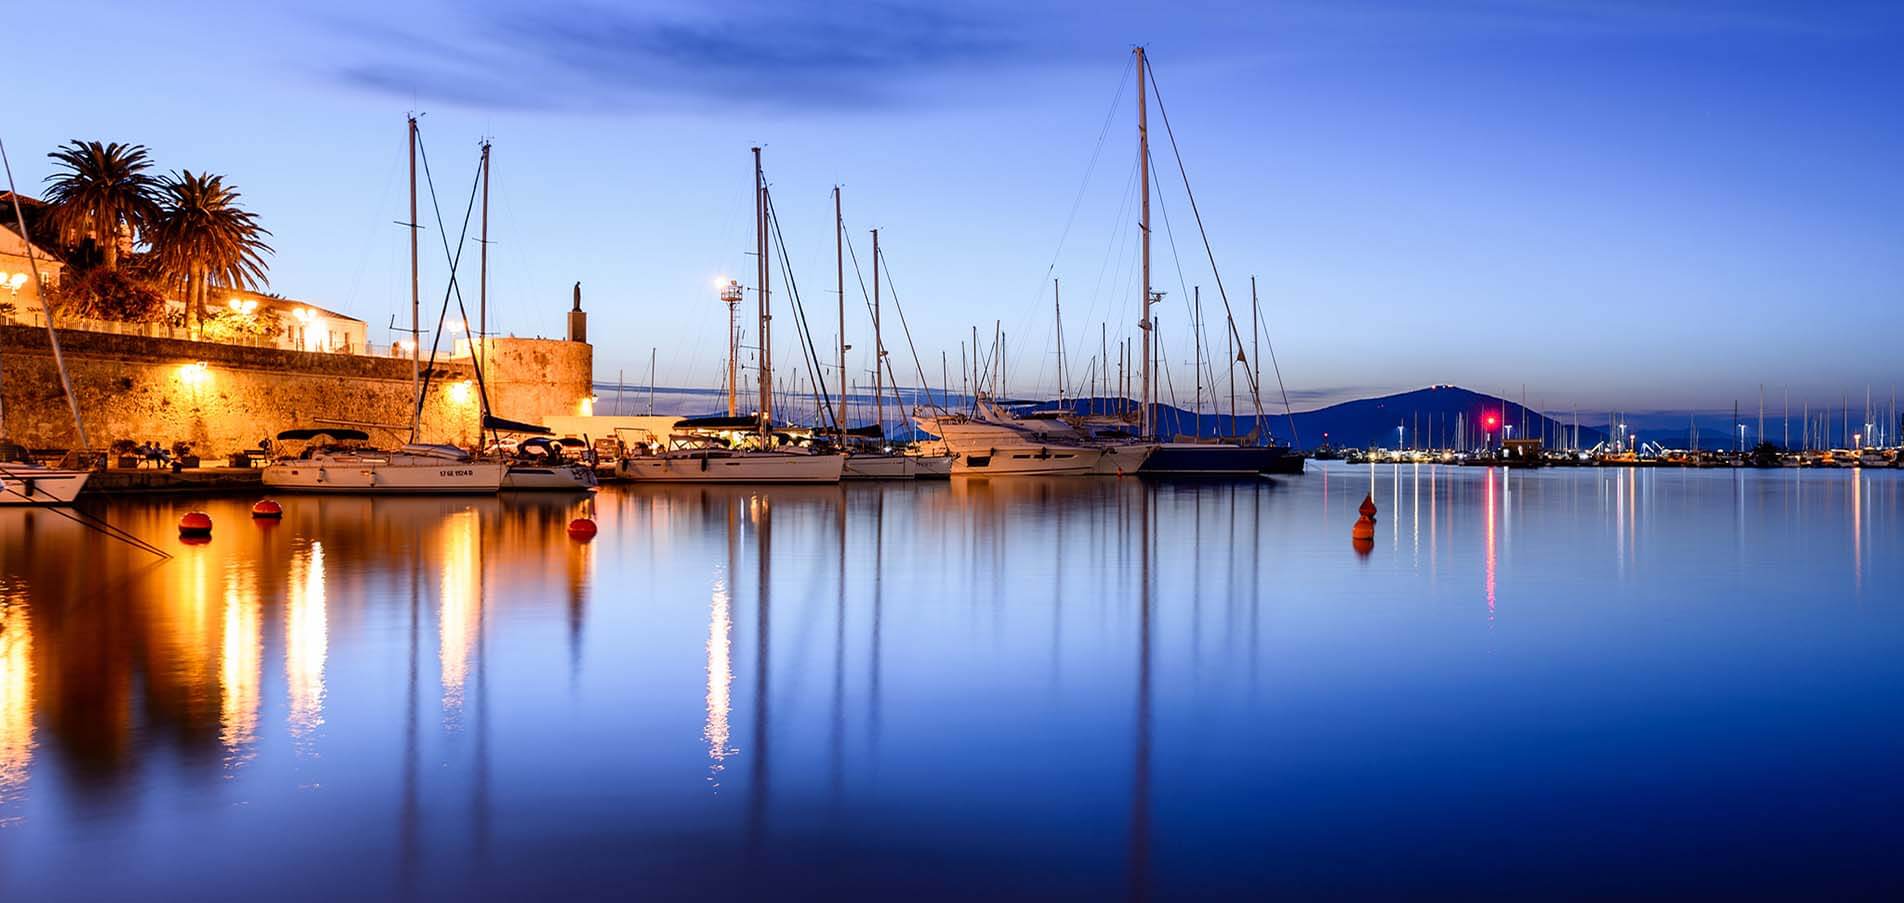 Location de yacht de luxe Sardaigne